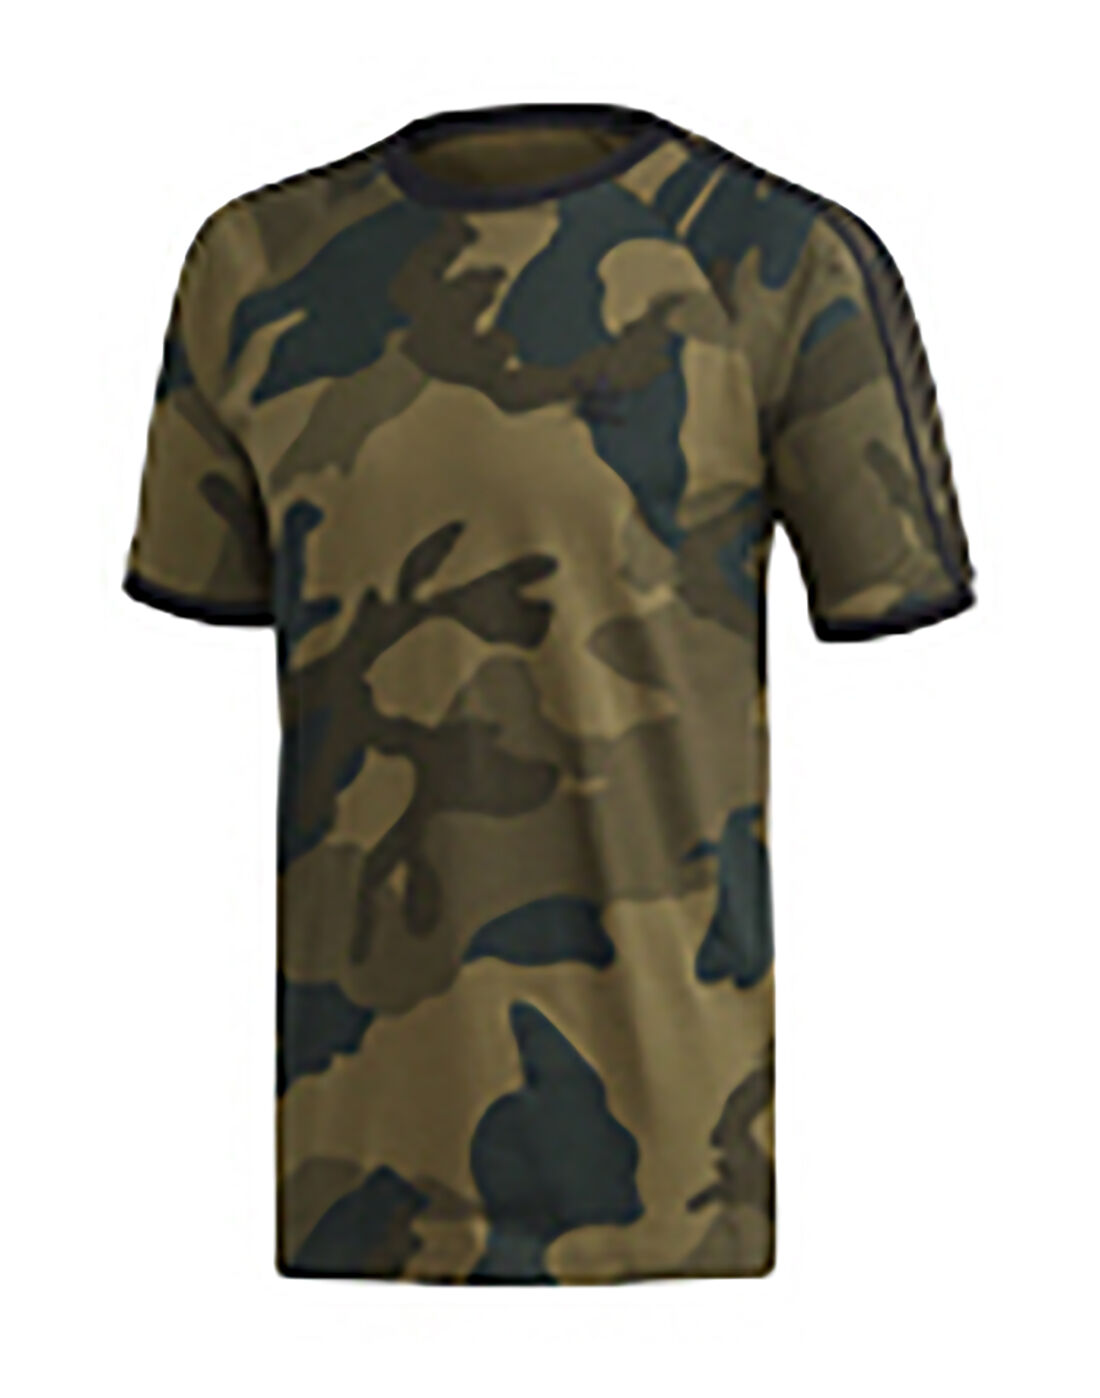 adidas military t shirt